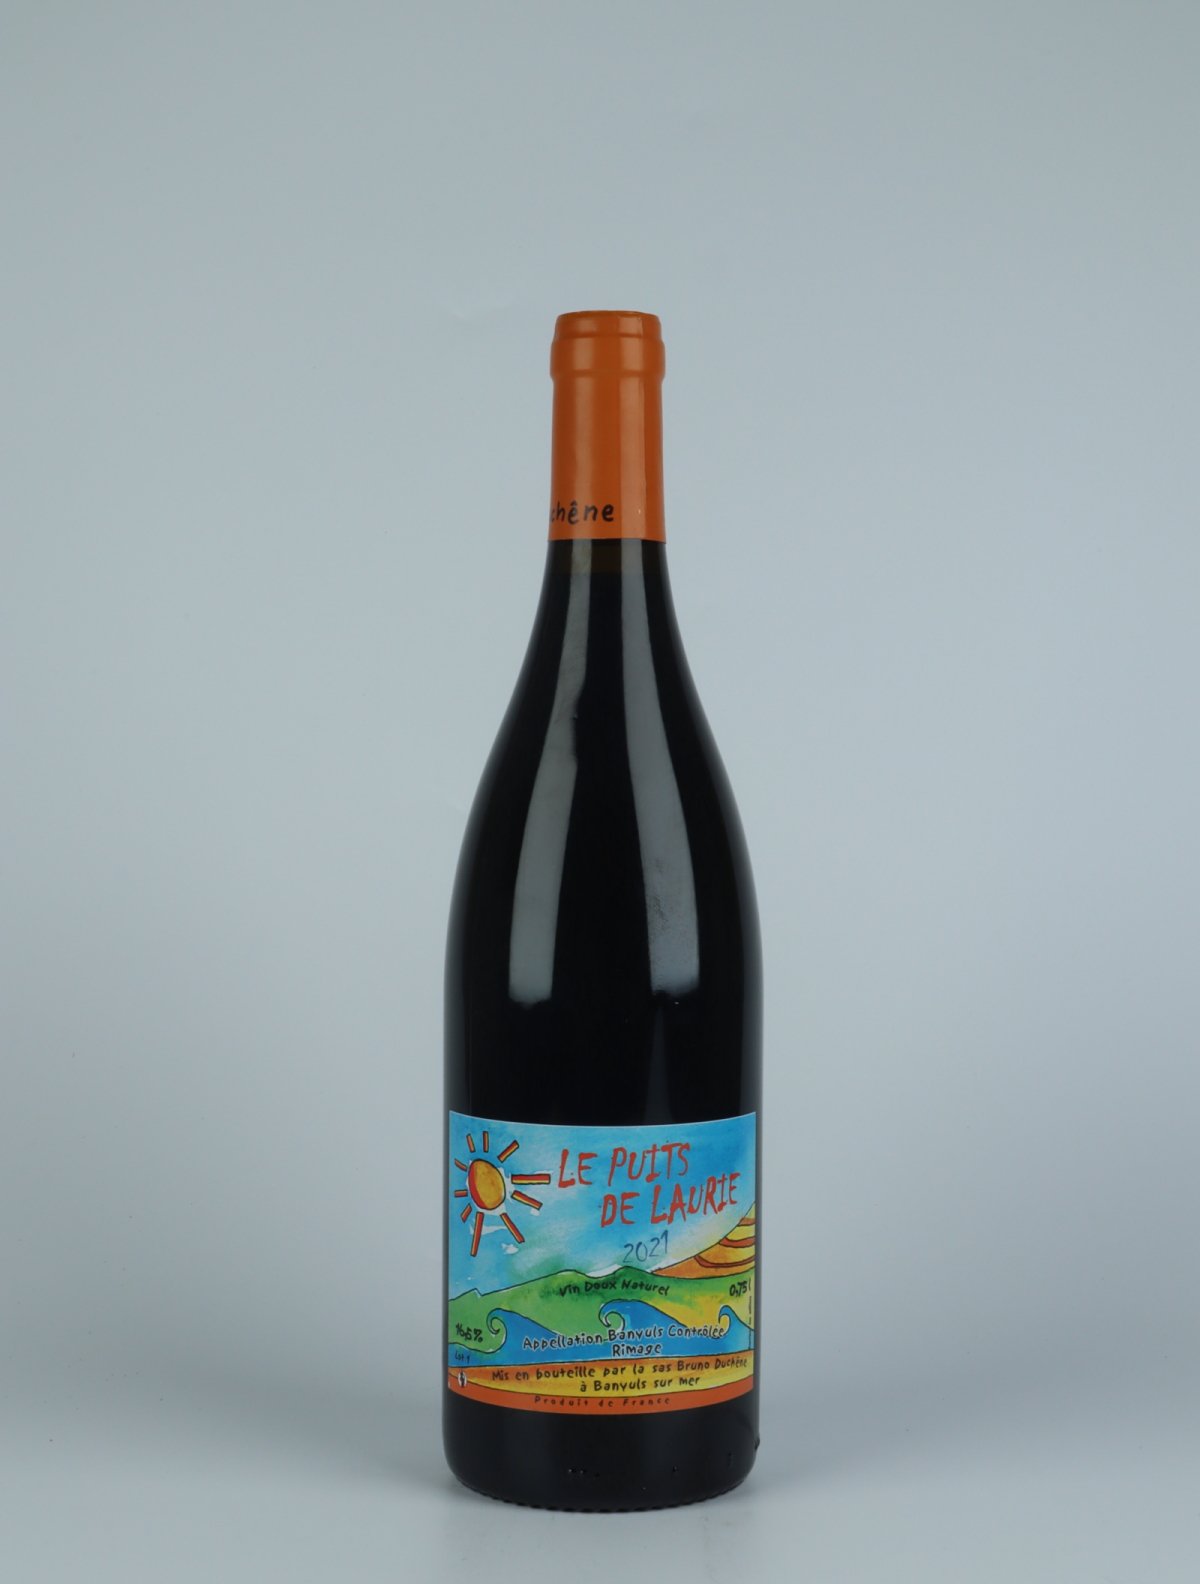 A bottle 2021 Le Puit de Laurie Sweet wine from Bruno Duchêne, Rousillon in France